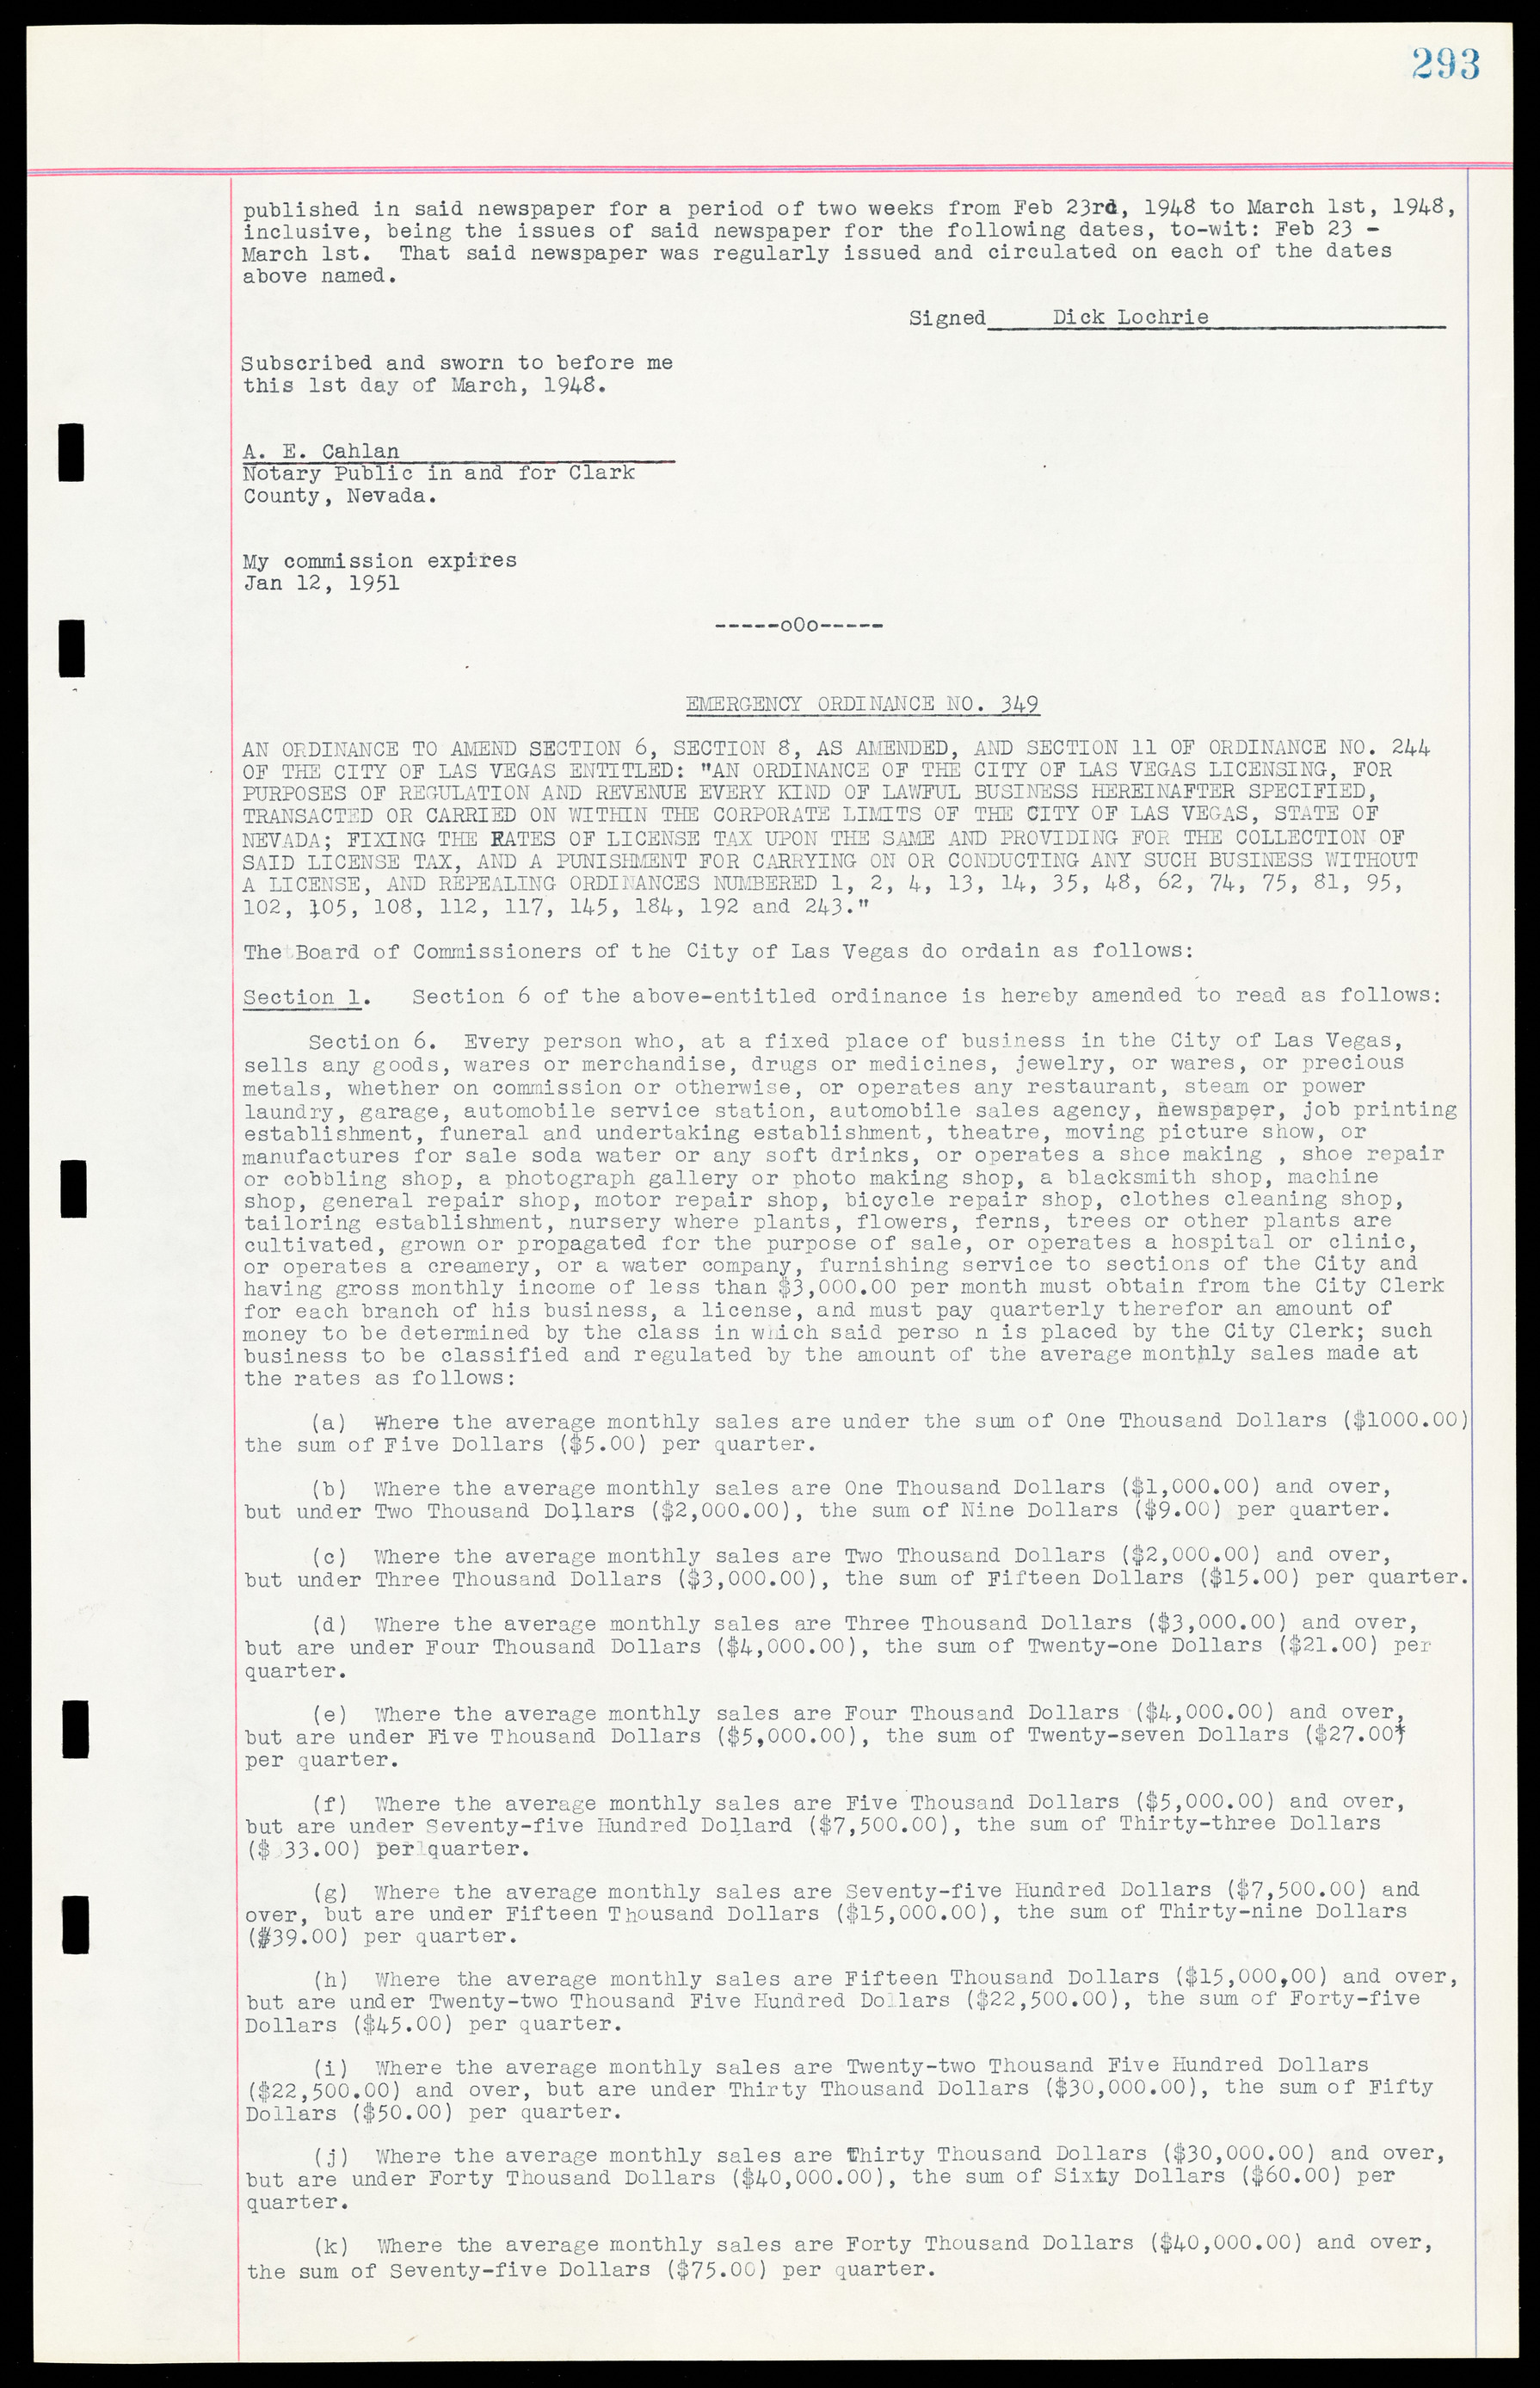 Las Vegas City Ordinances, March 31, 1933 to October 25, 1950, lvc000014-322